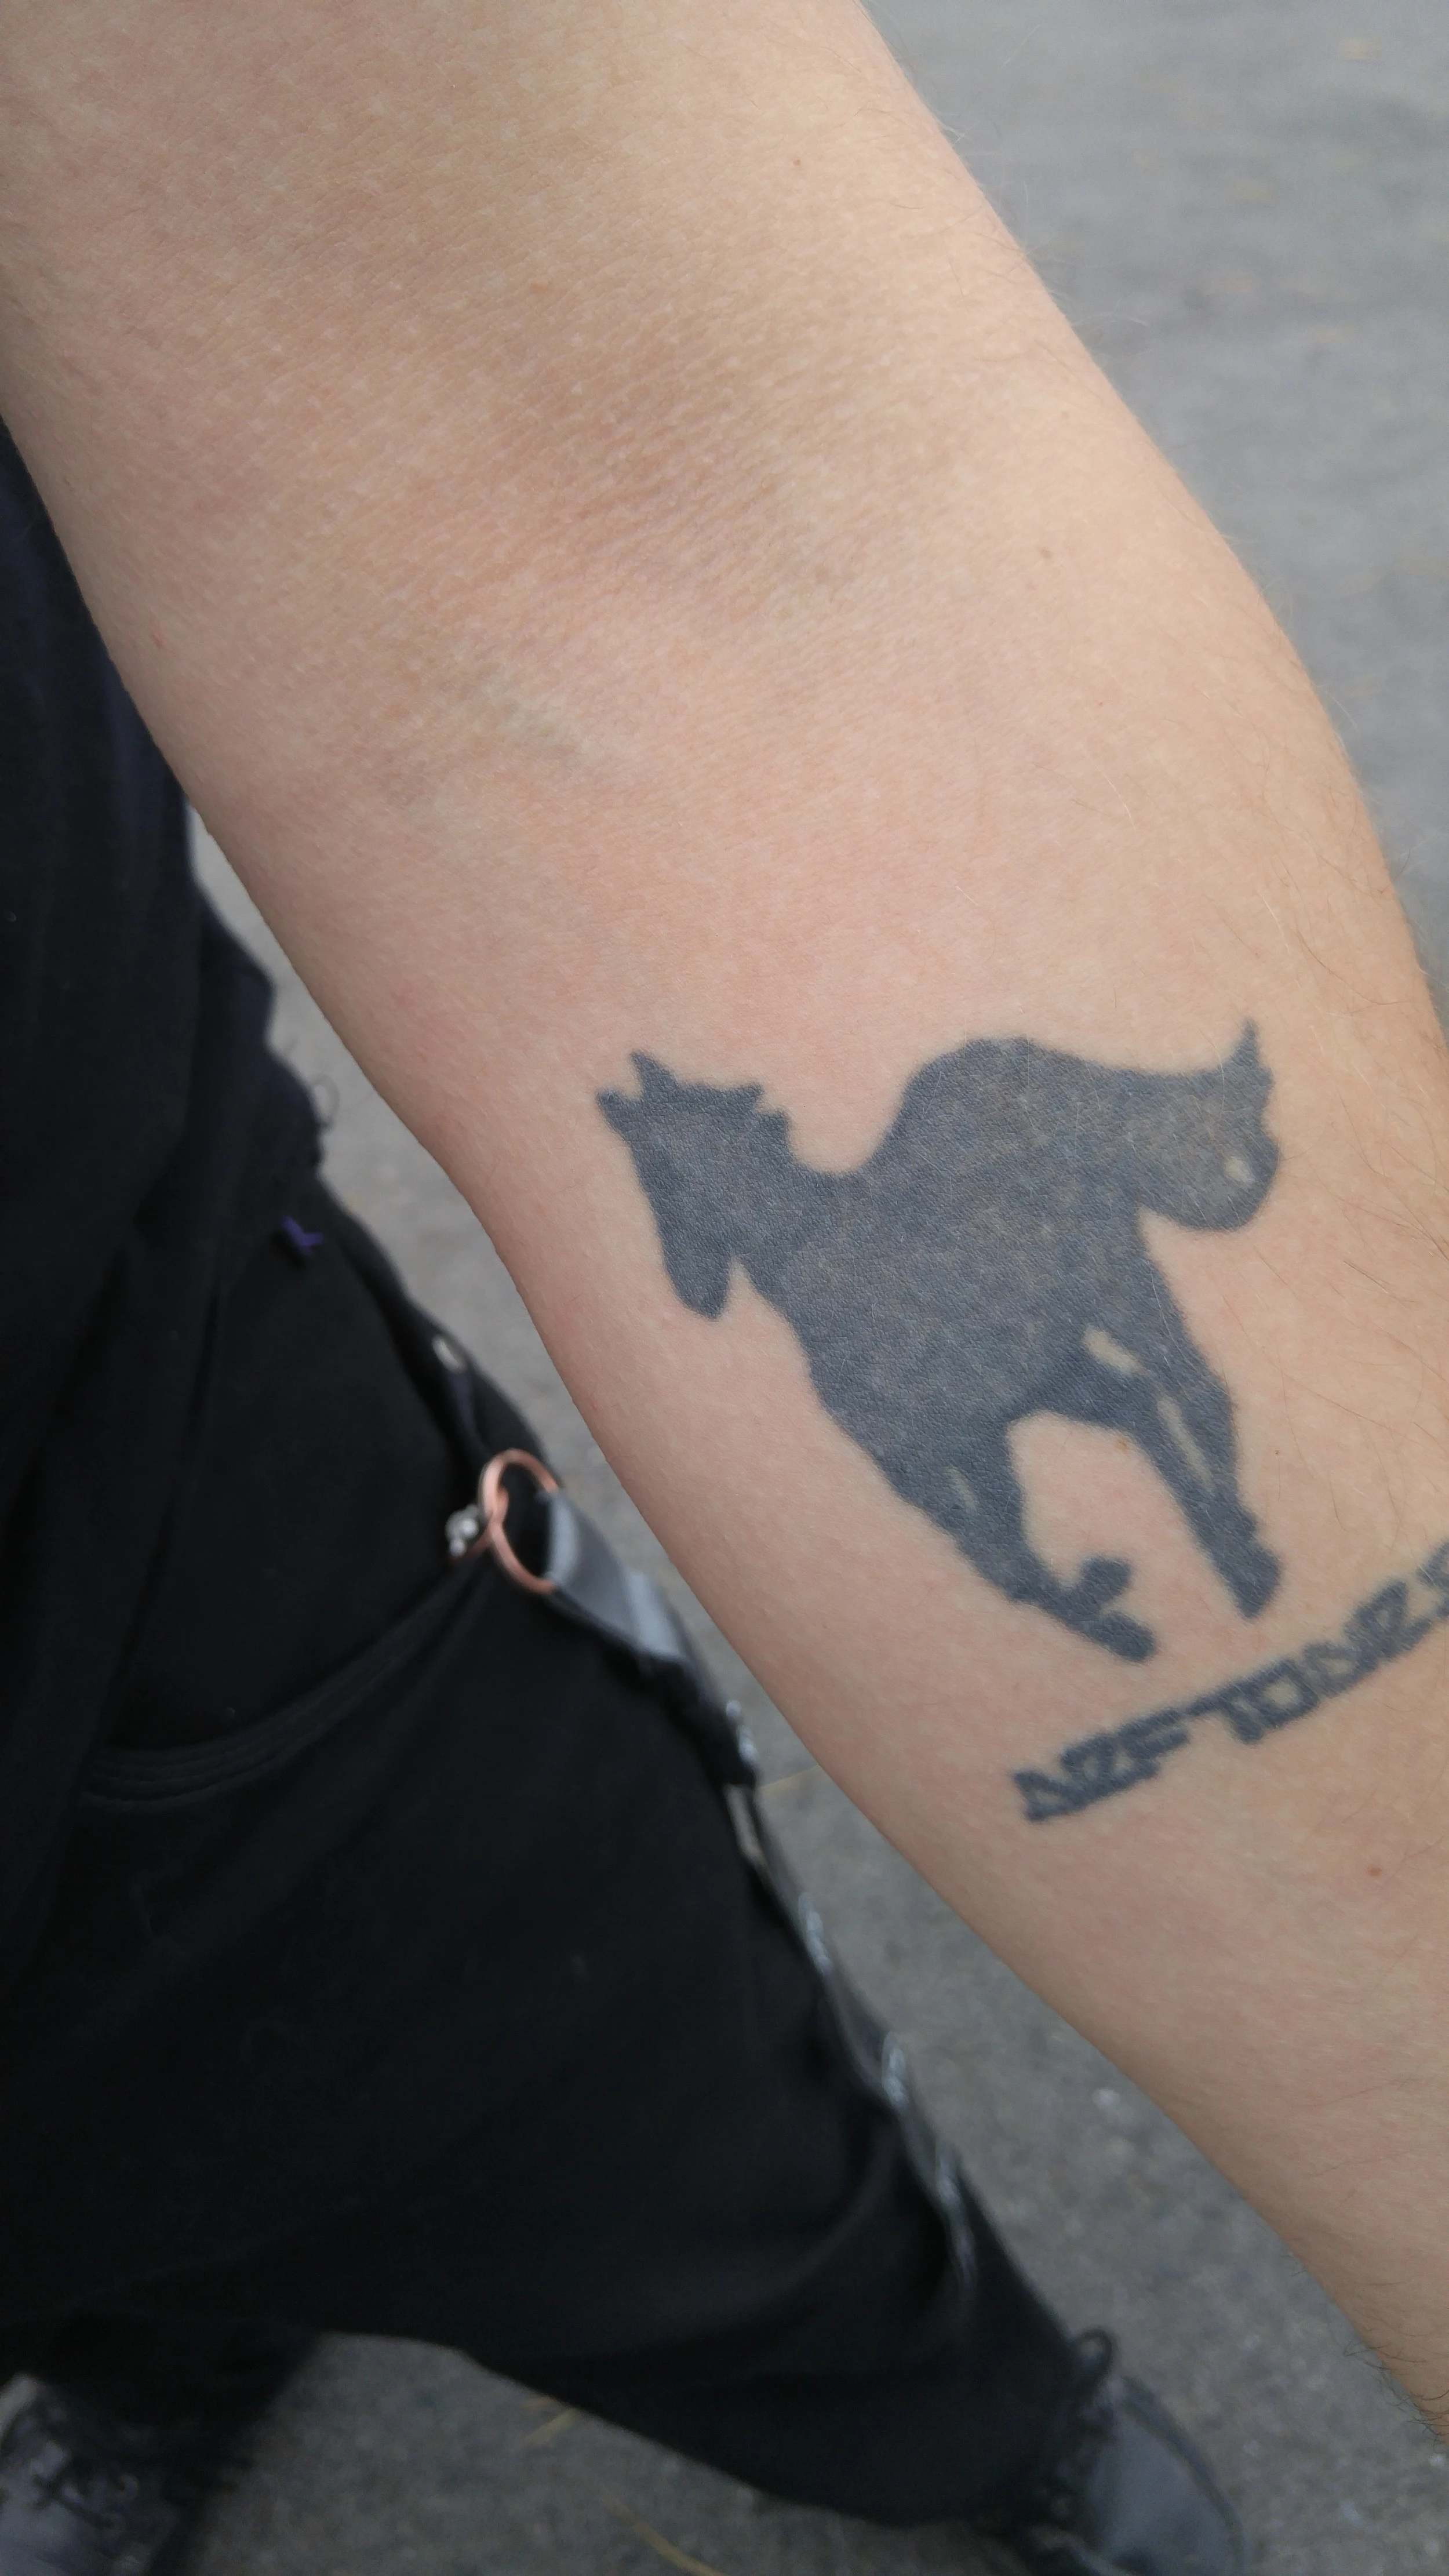 Buy Horse Temporary Tattoo  Animal Tattoo  Horse Tattoos Online in India   Etsy